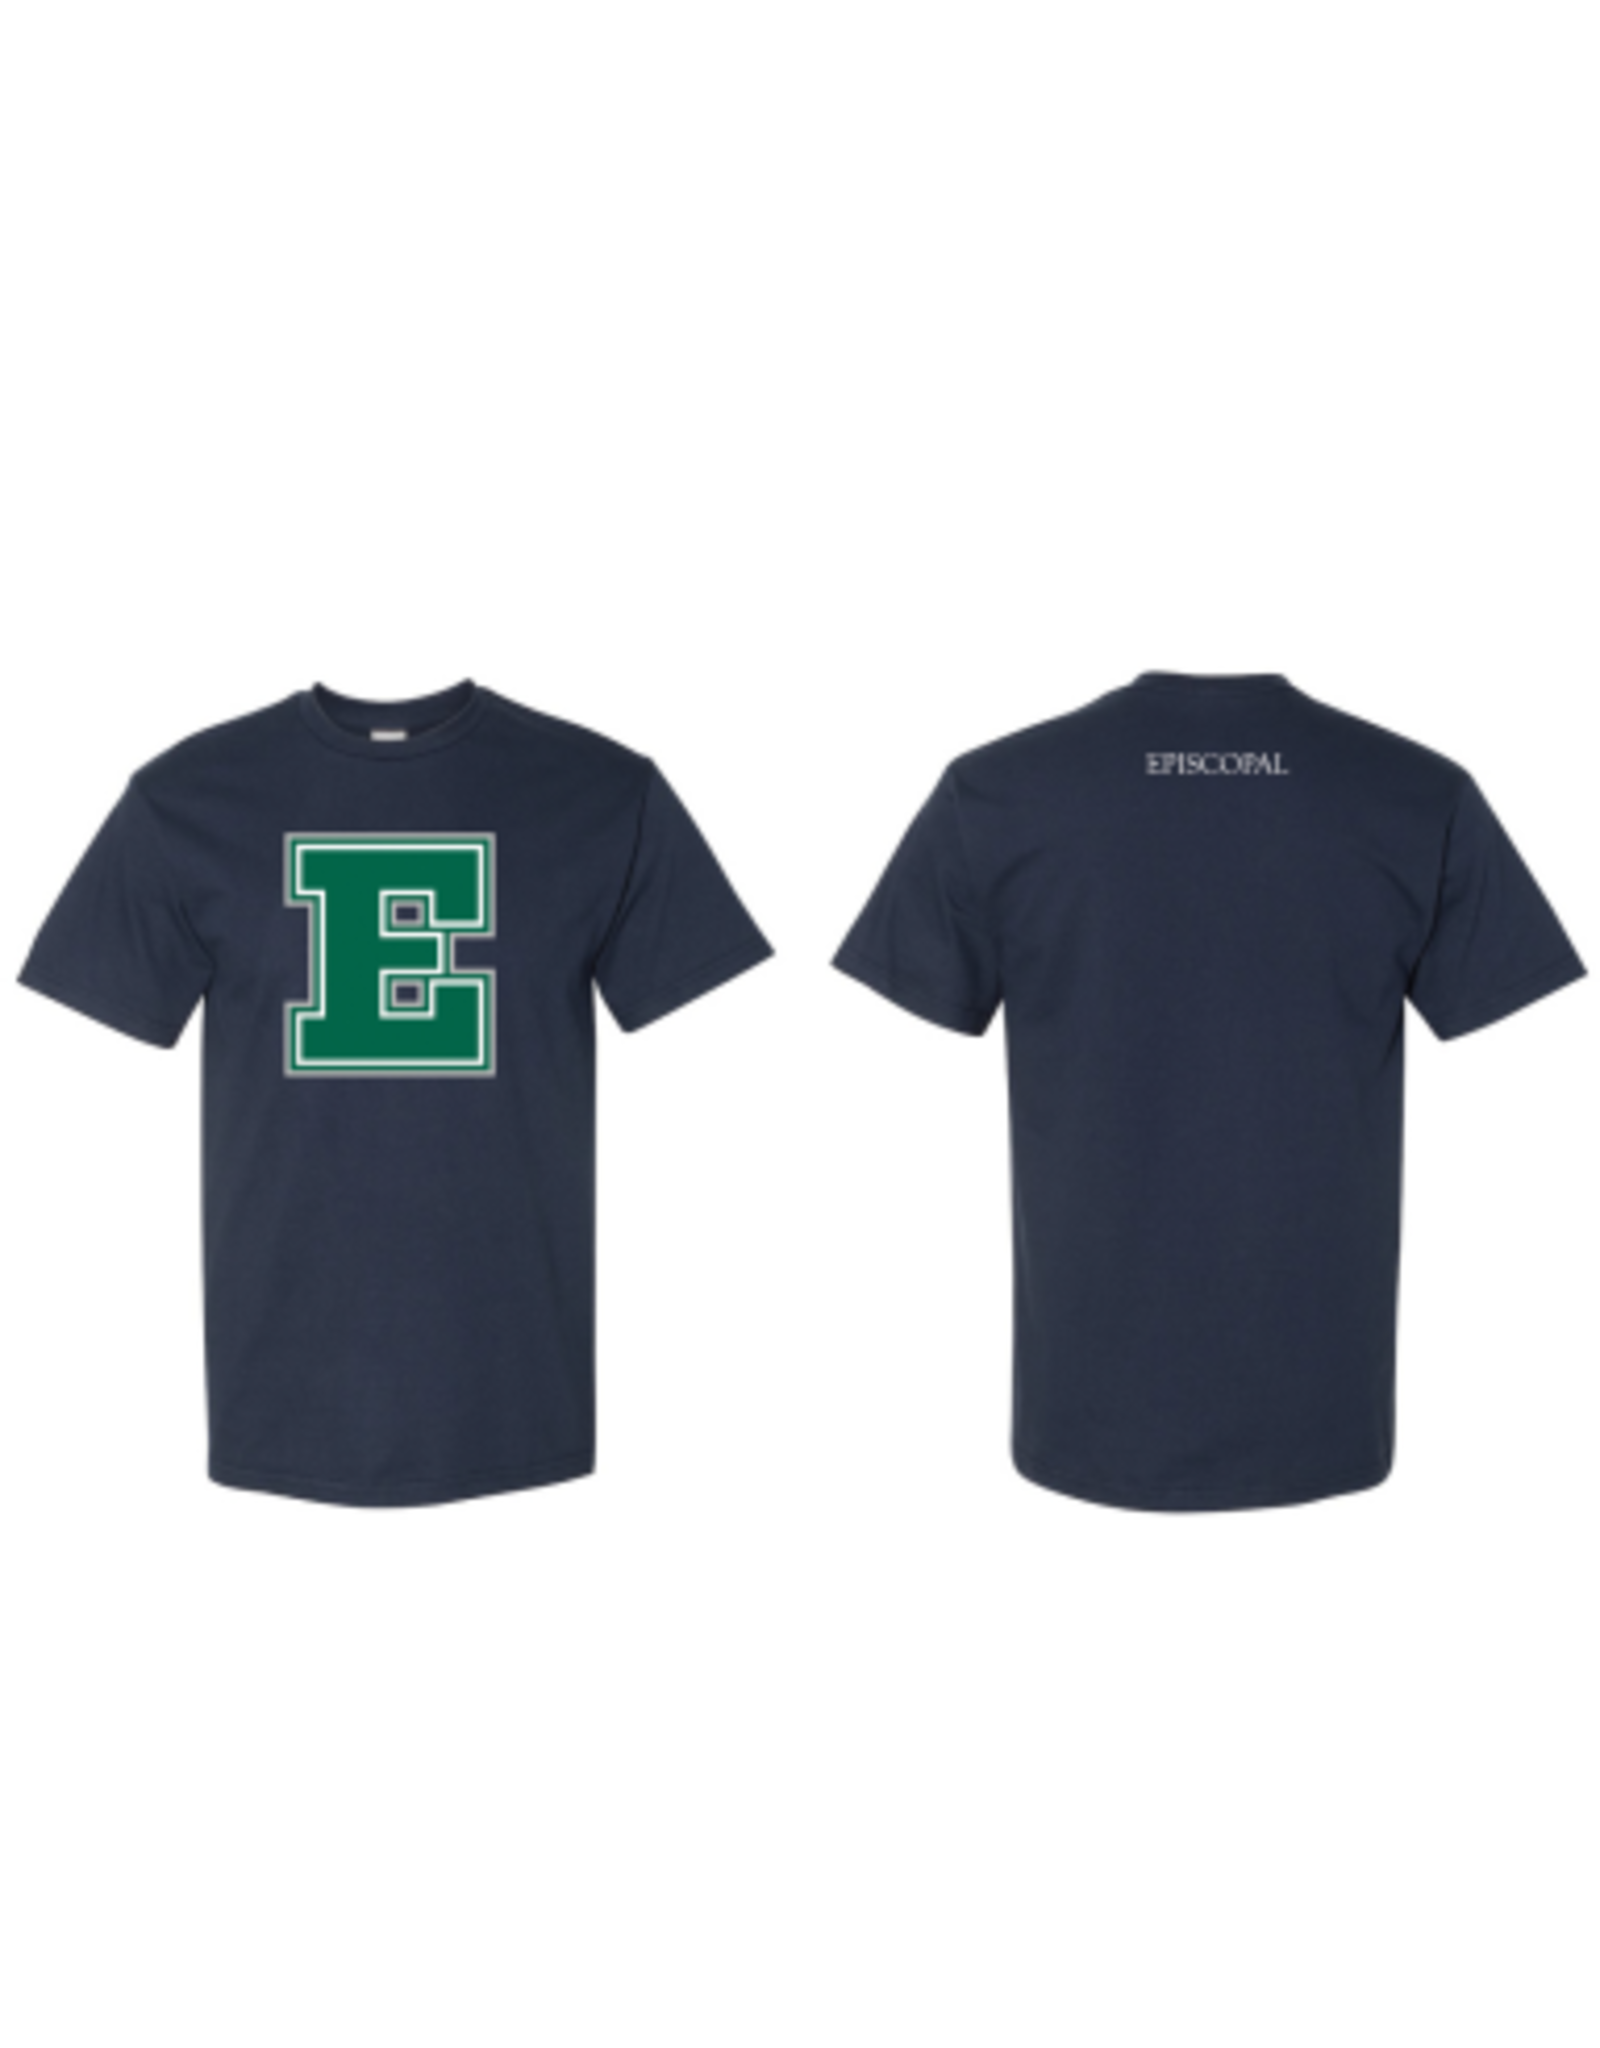 Gildan Big E Navy short sleeve t-shirt